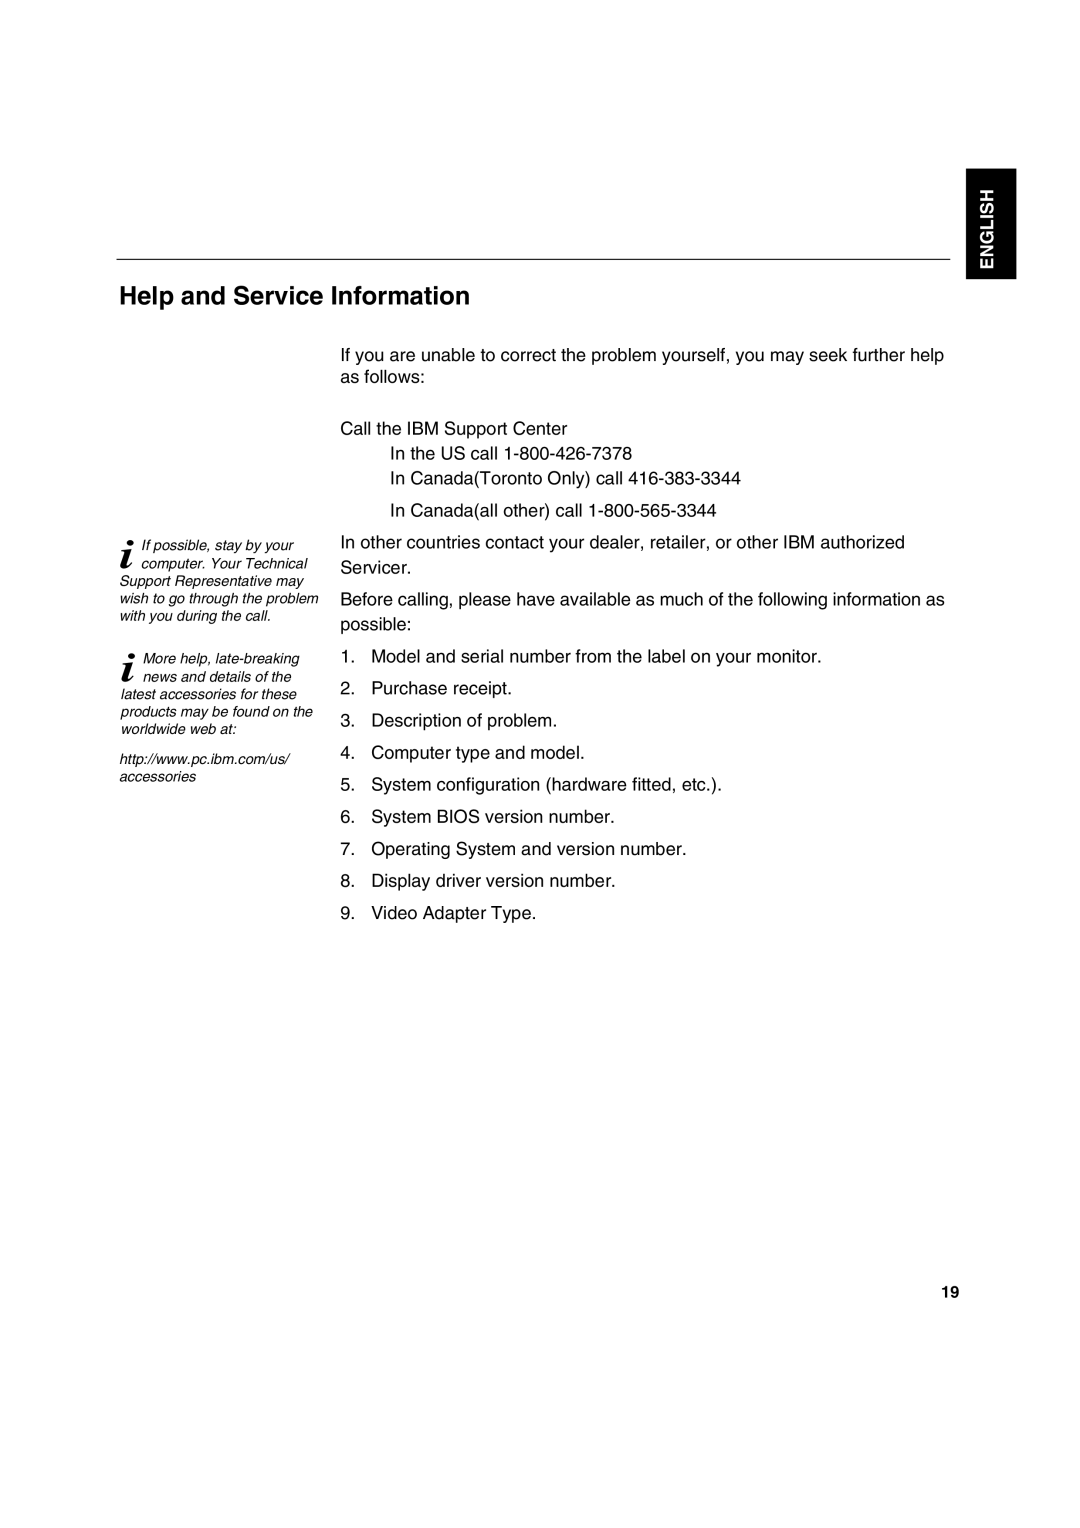 IBM C170 manual Help and Service Information, English 